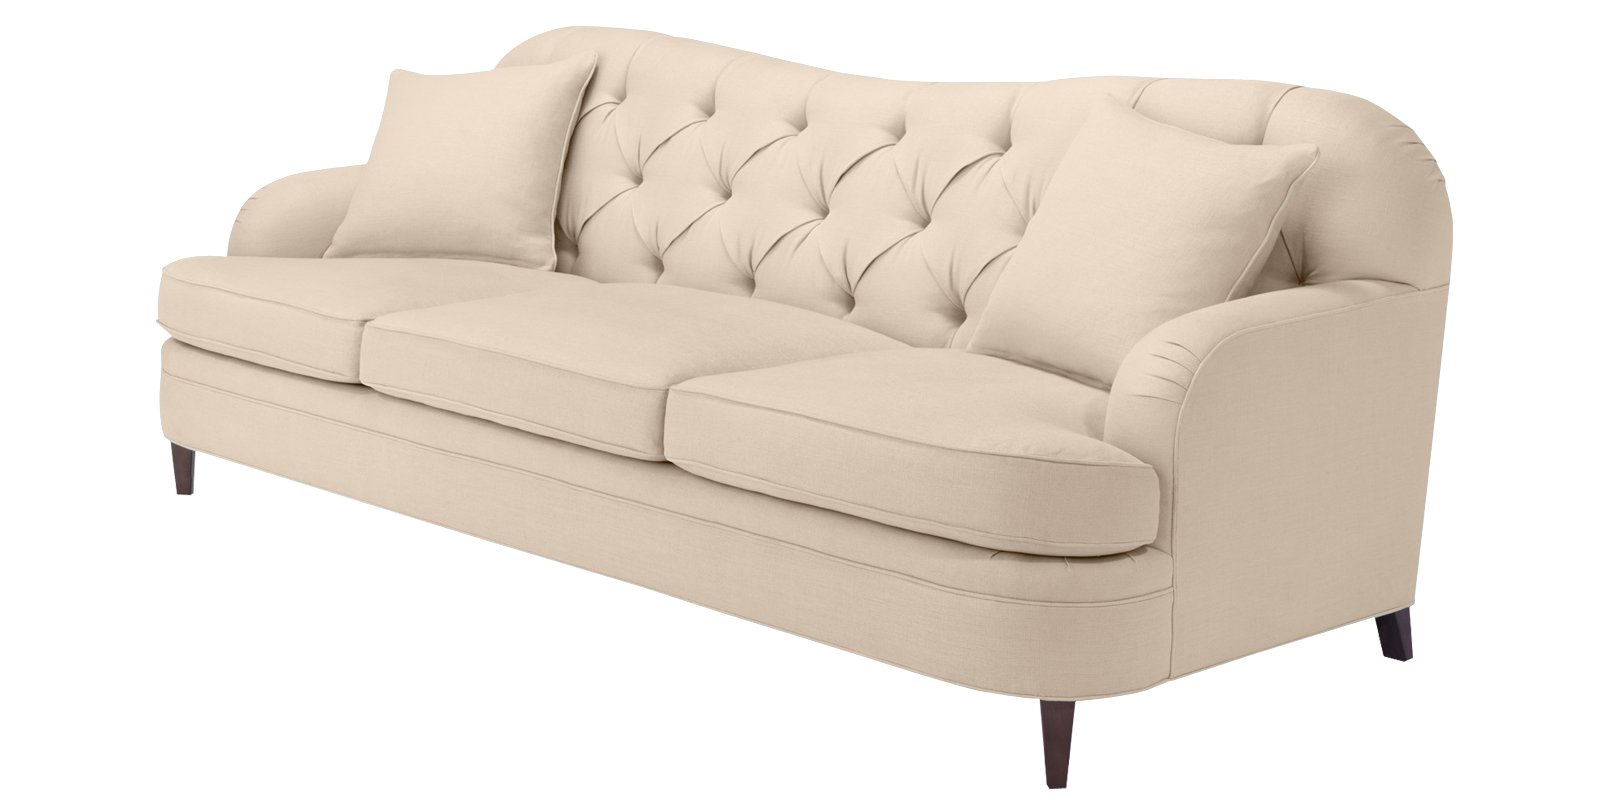 Cadet 3 Seater Sofa in Beige colour - Dreamzz Furniture | Online Furniture  Shop